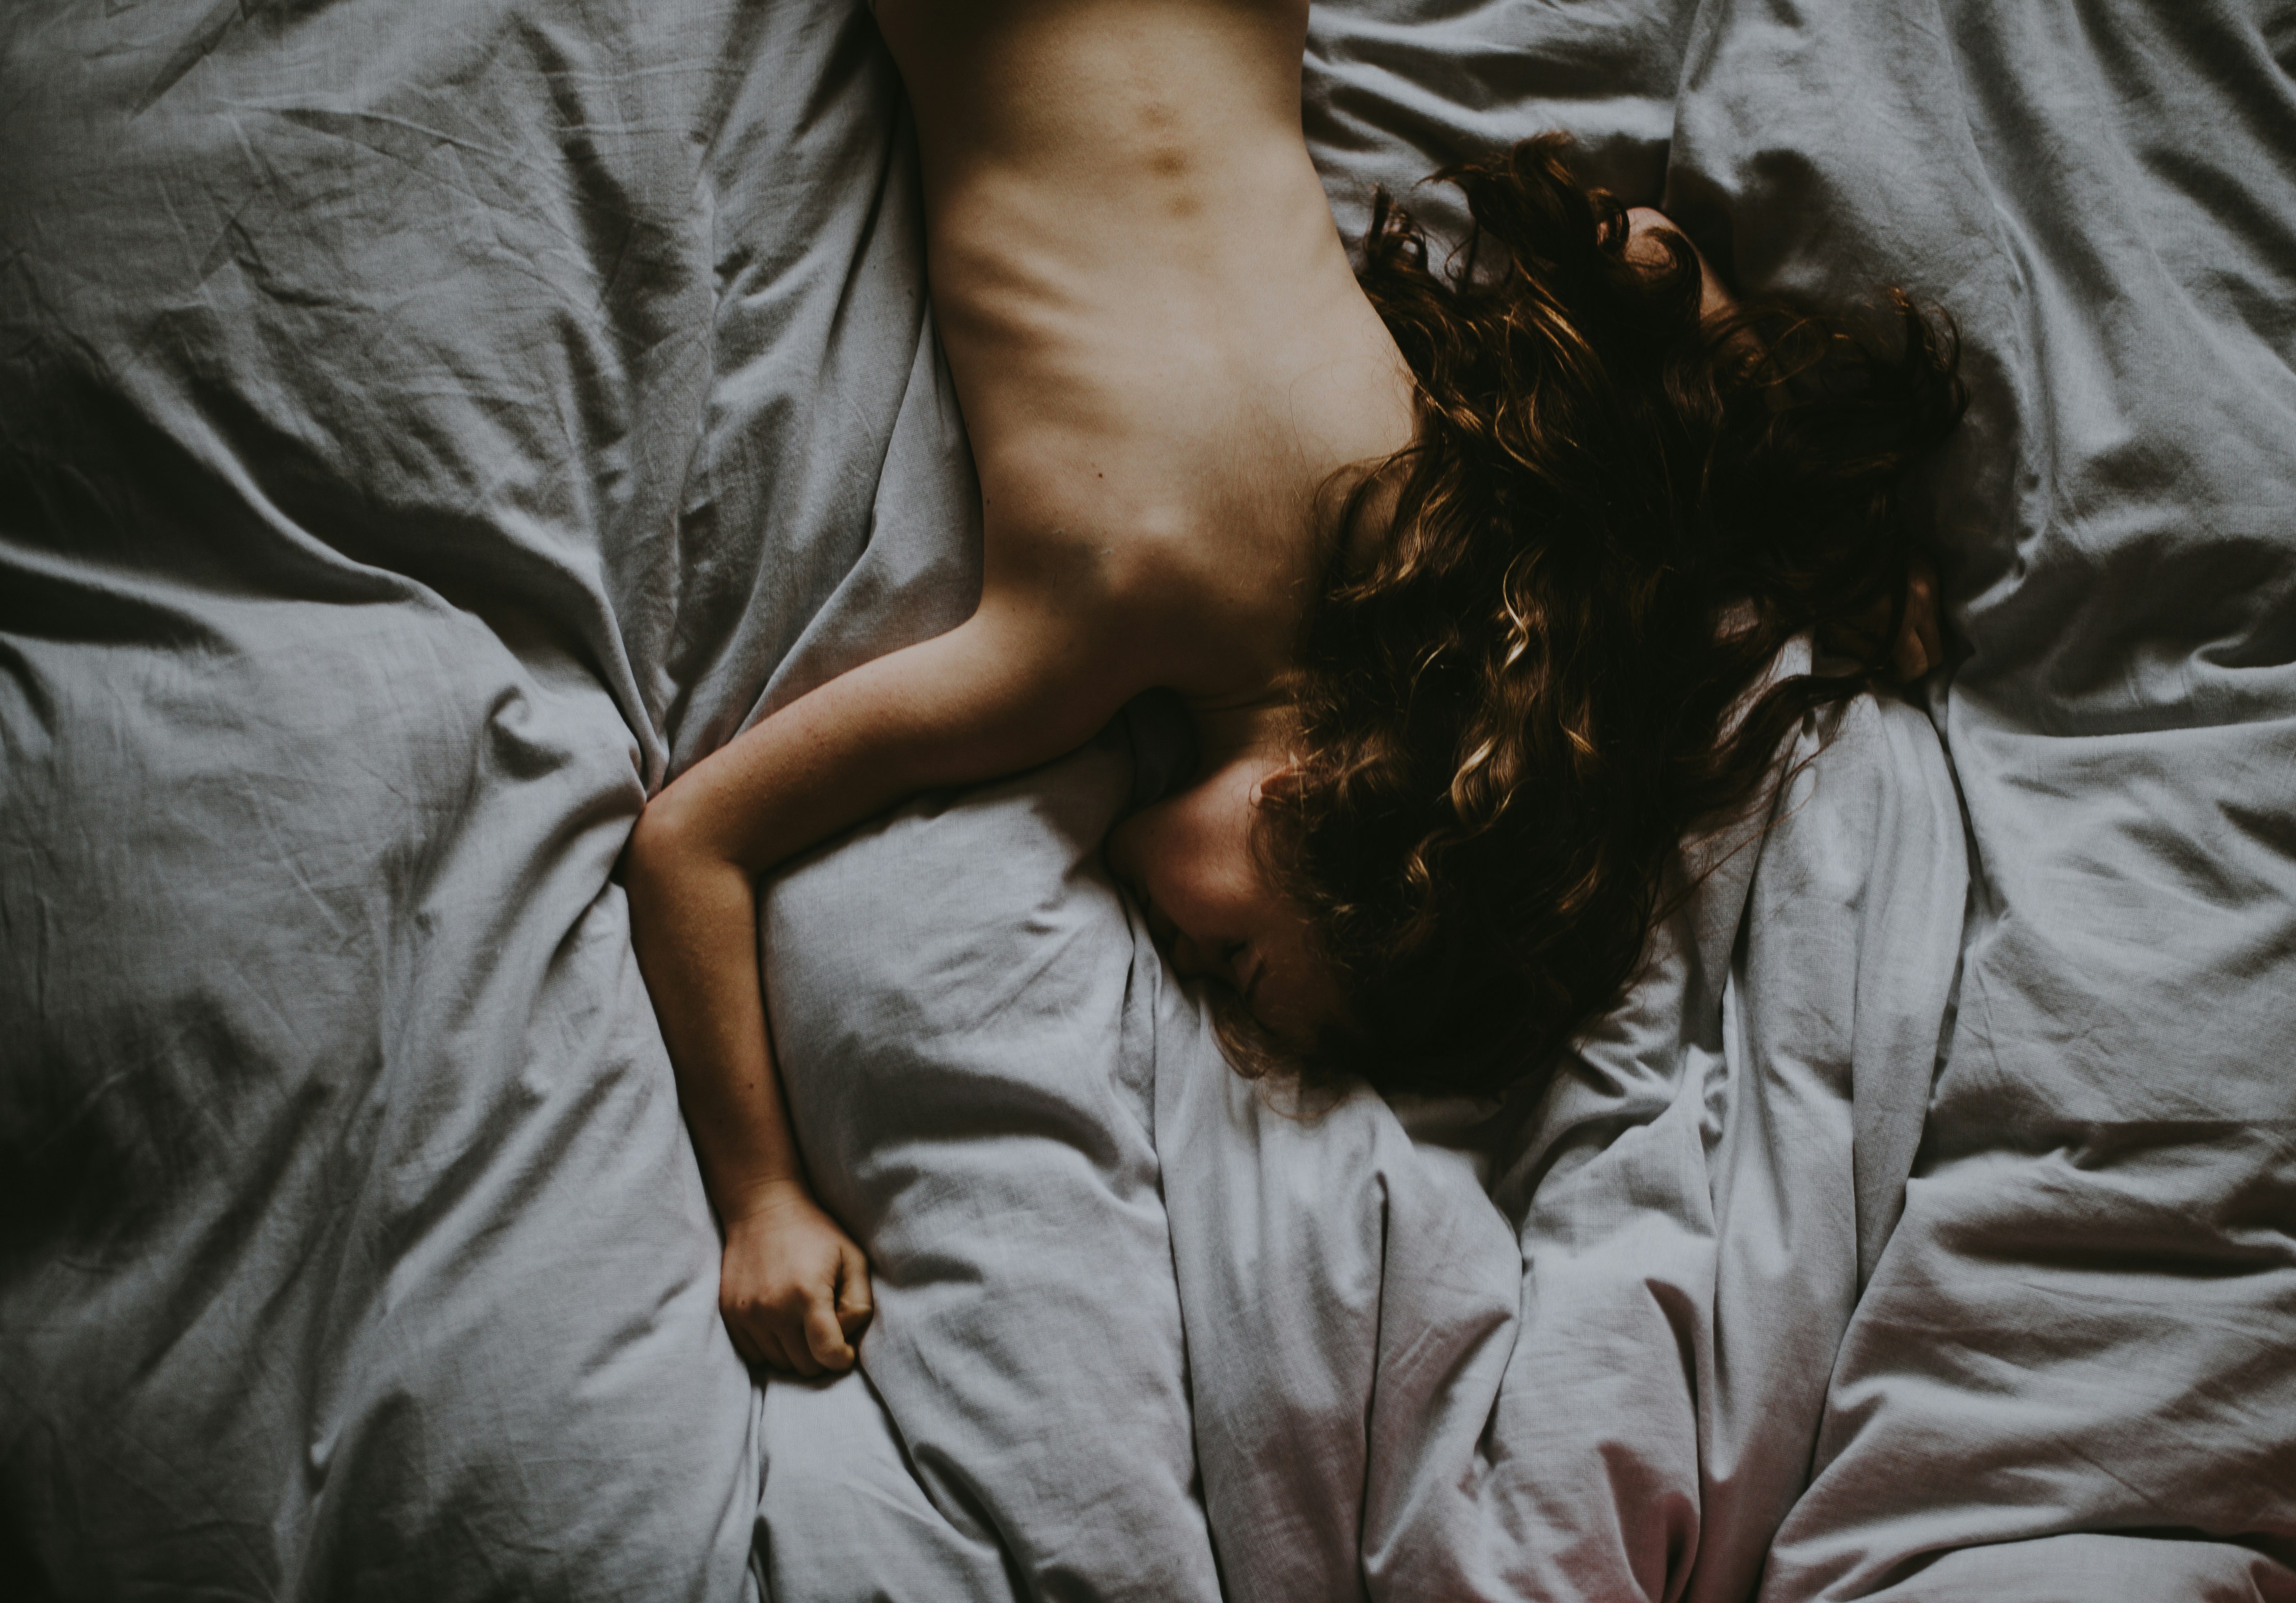 charmaine seaton share teen girl sleeping naked photos